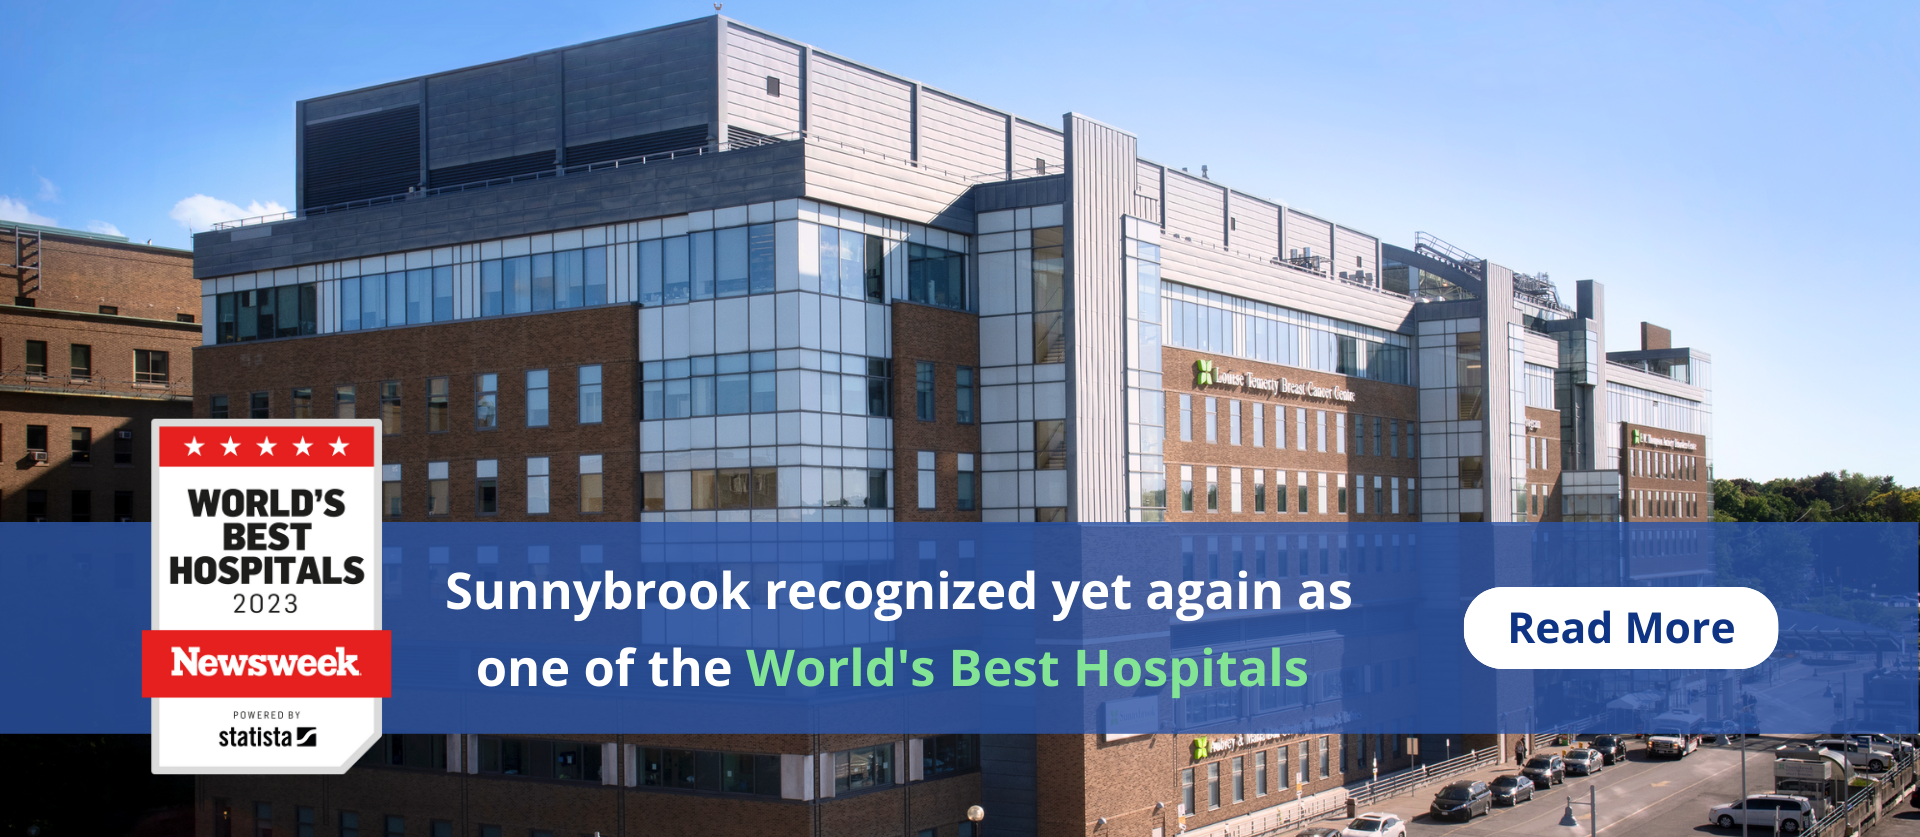 Sunnybrook once again named world's best hospitals